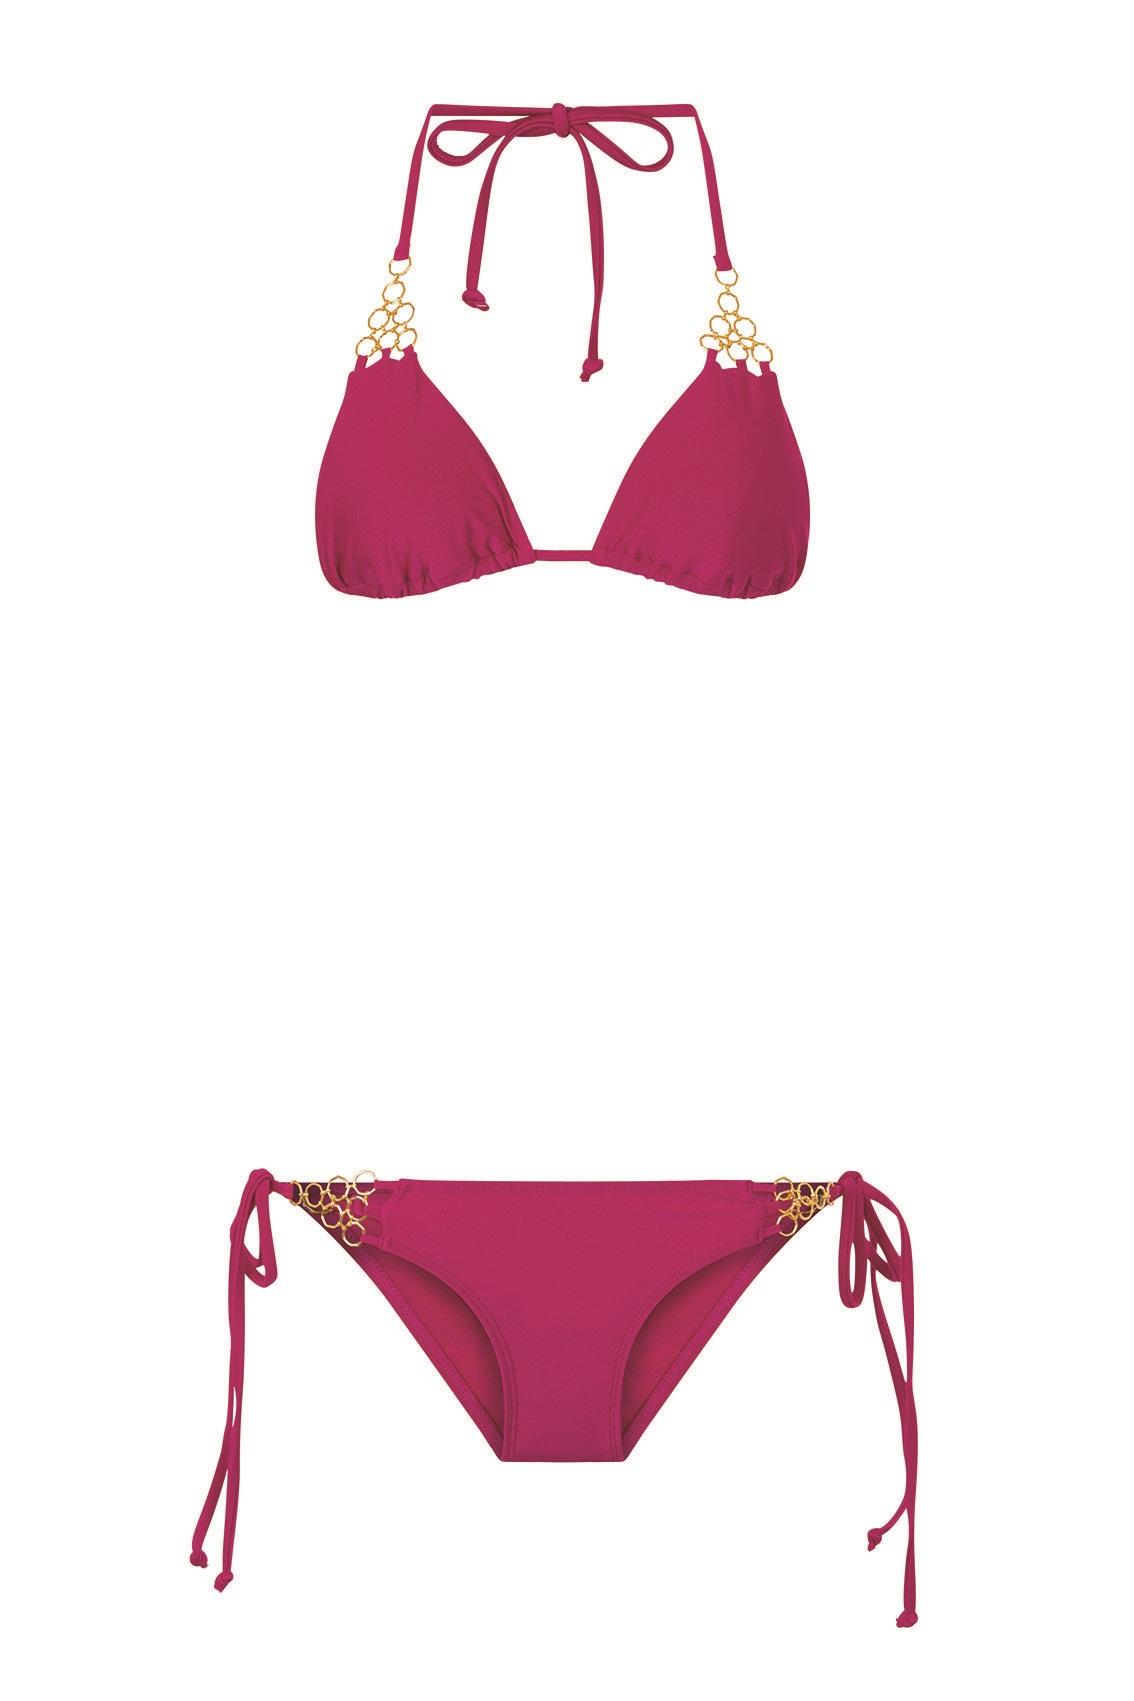 Bahami, Raspberry Kiss Bikini, £35